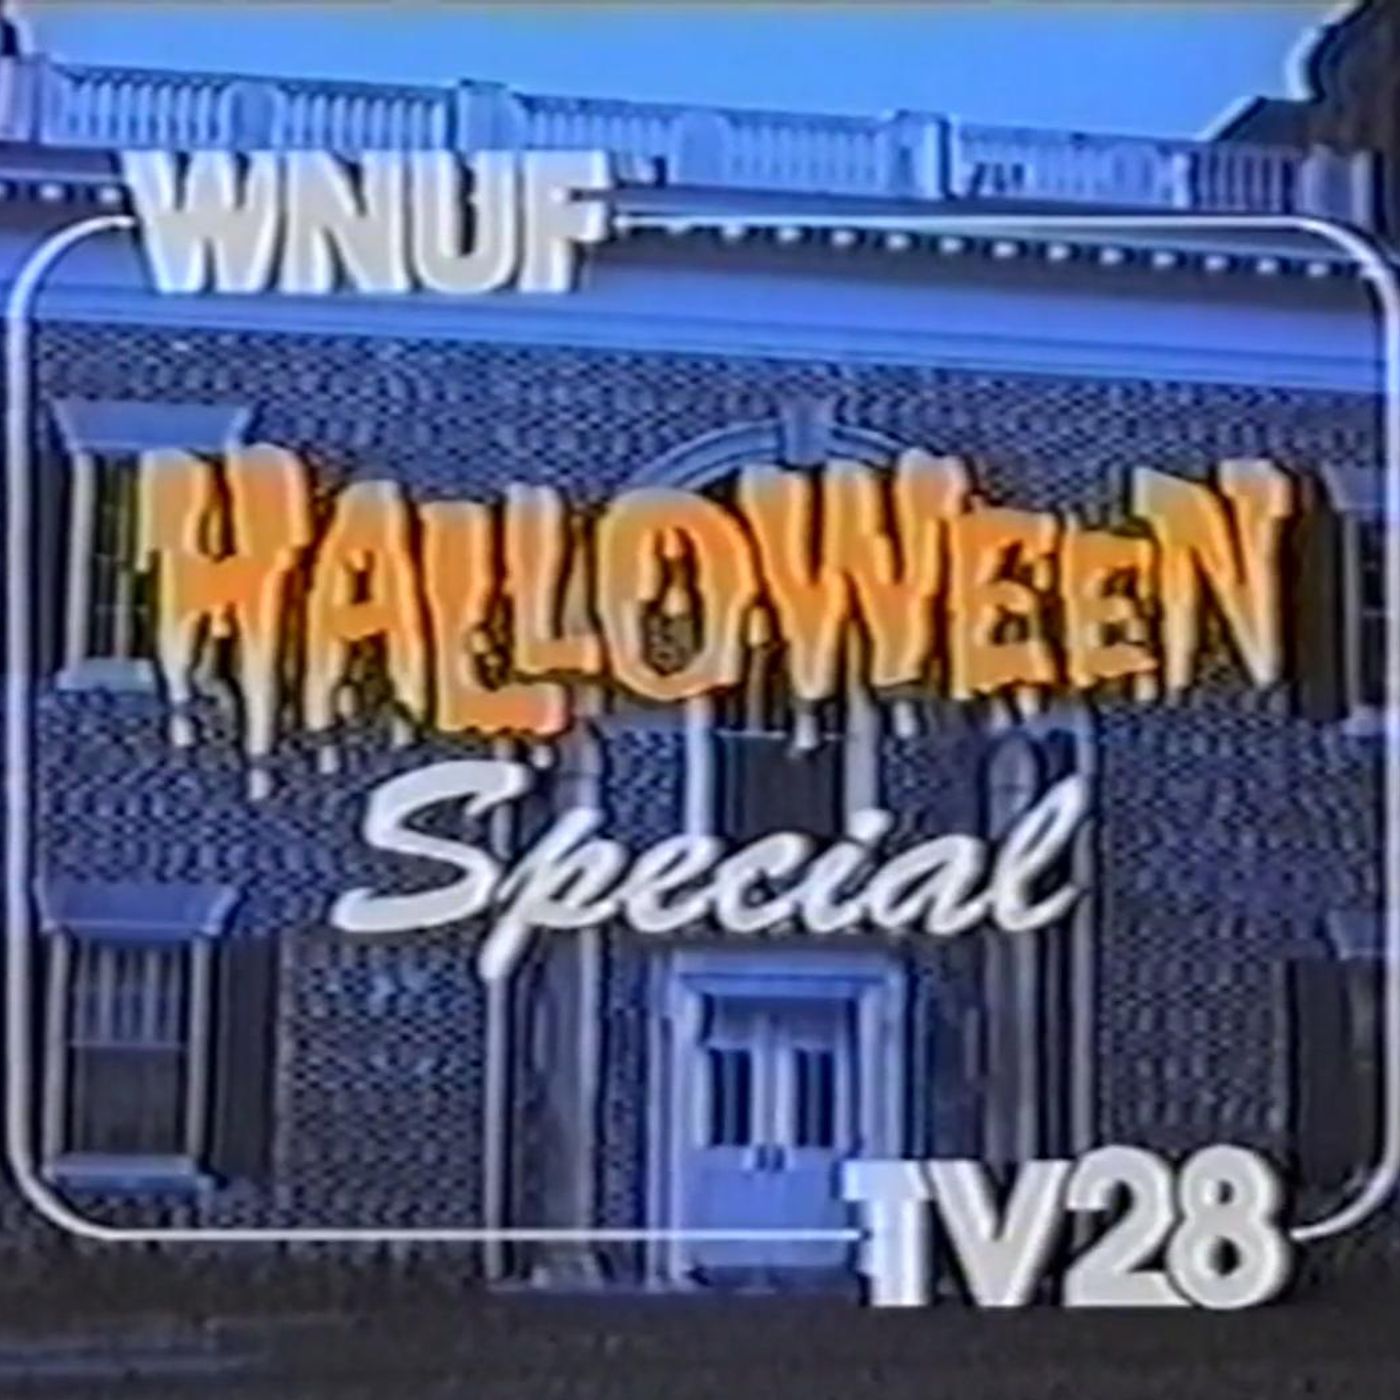 WNUF Halloween Special (2013)